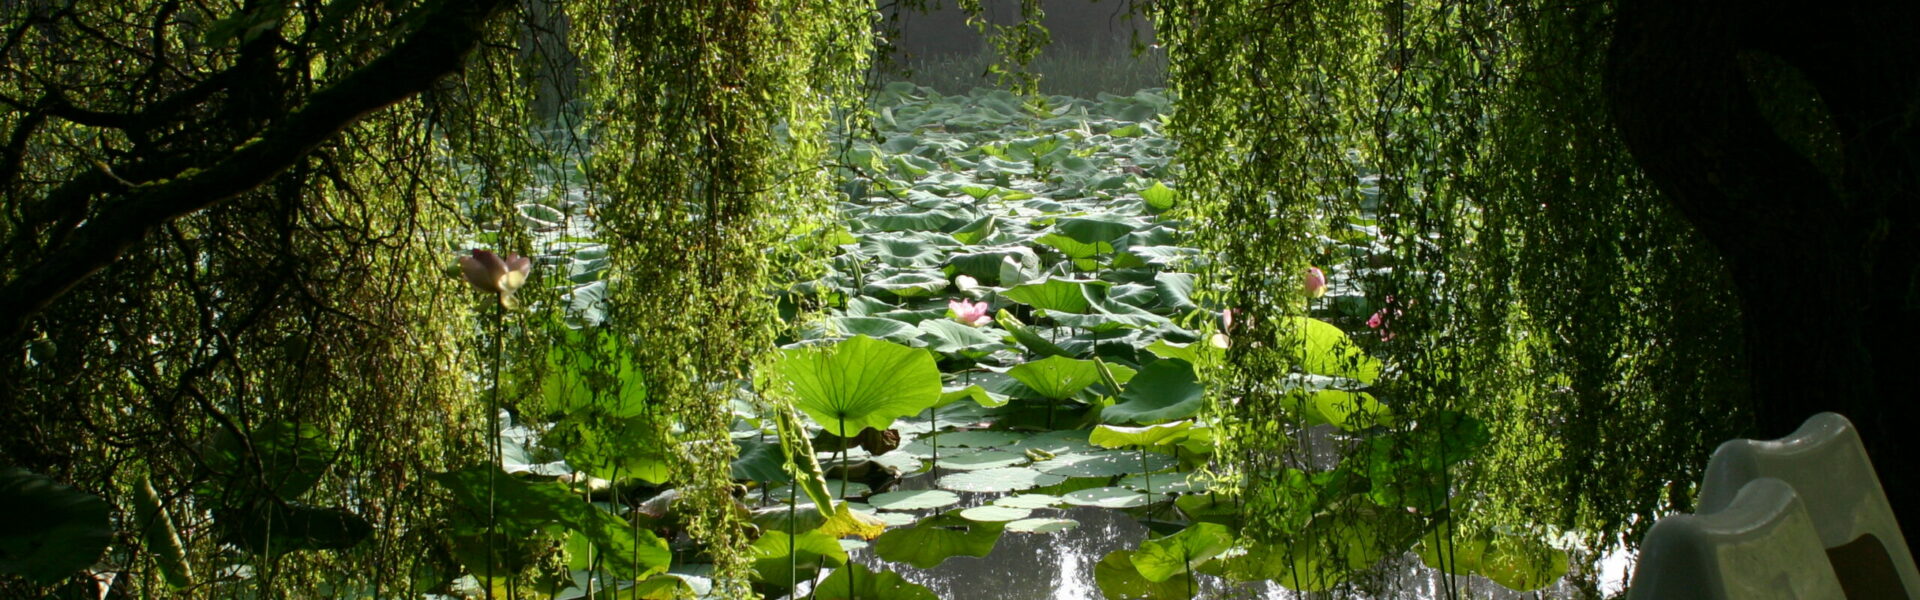 Water garden - Saint-Didier-sur-Chalaronne - Ain